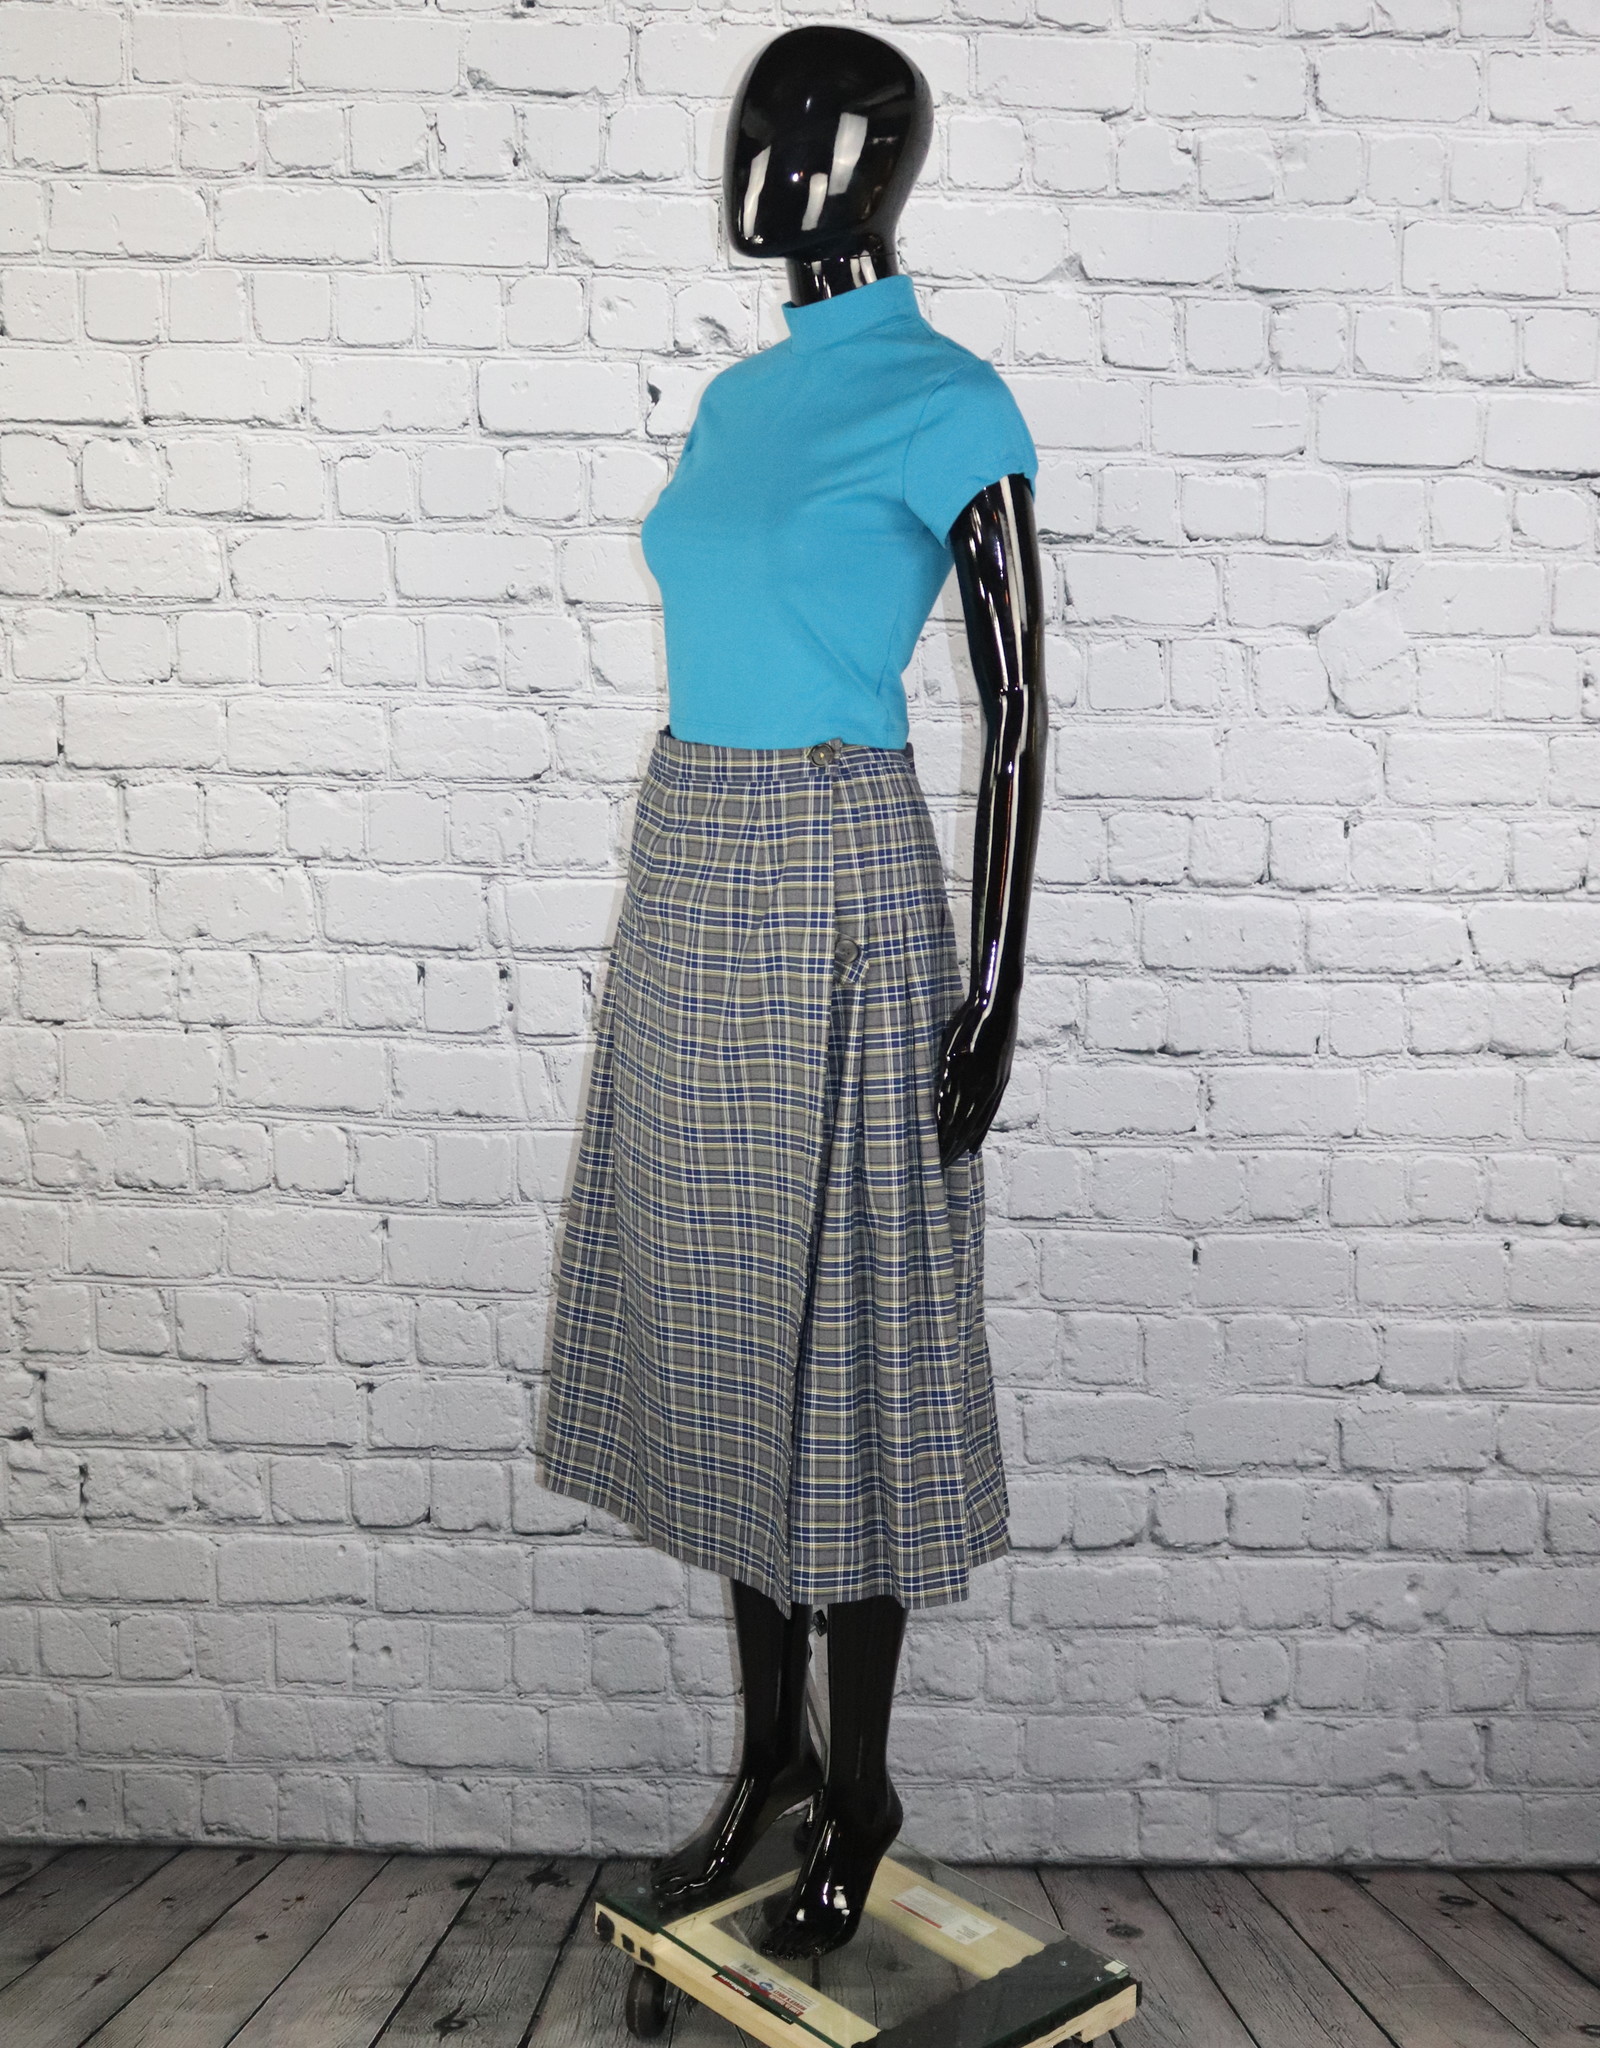 Royal Park Uniforms: 1970's Vintage Wrap Around School Girl Skirt